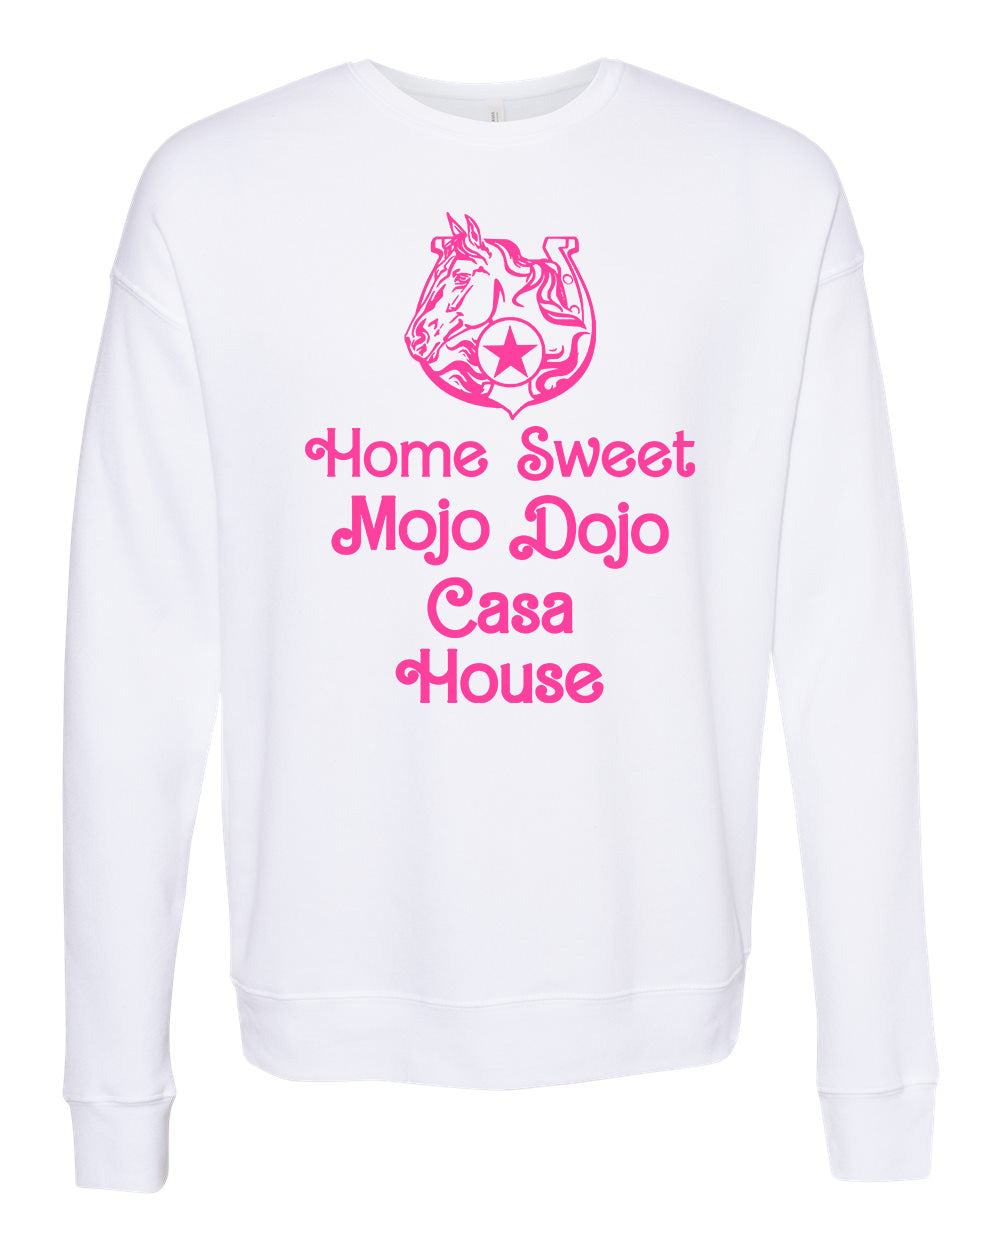 Home Sweet Mojo Dojo Casa House - Unisex Sweatshirt - White with Pink Ink